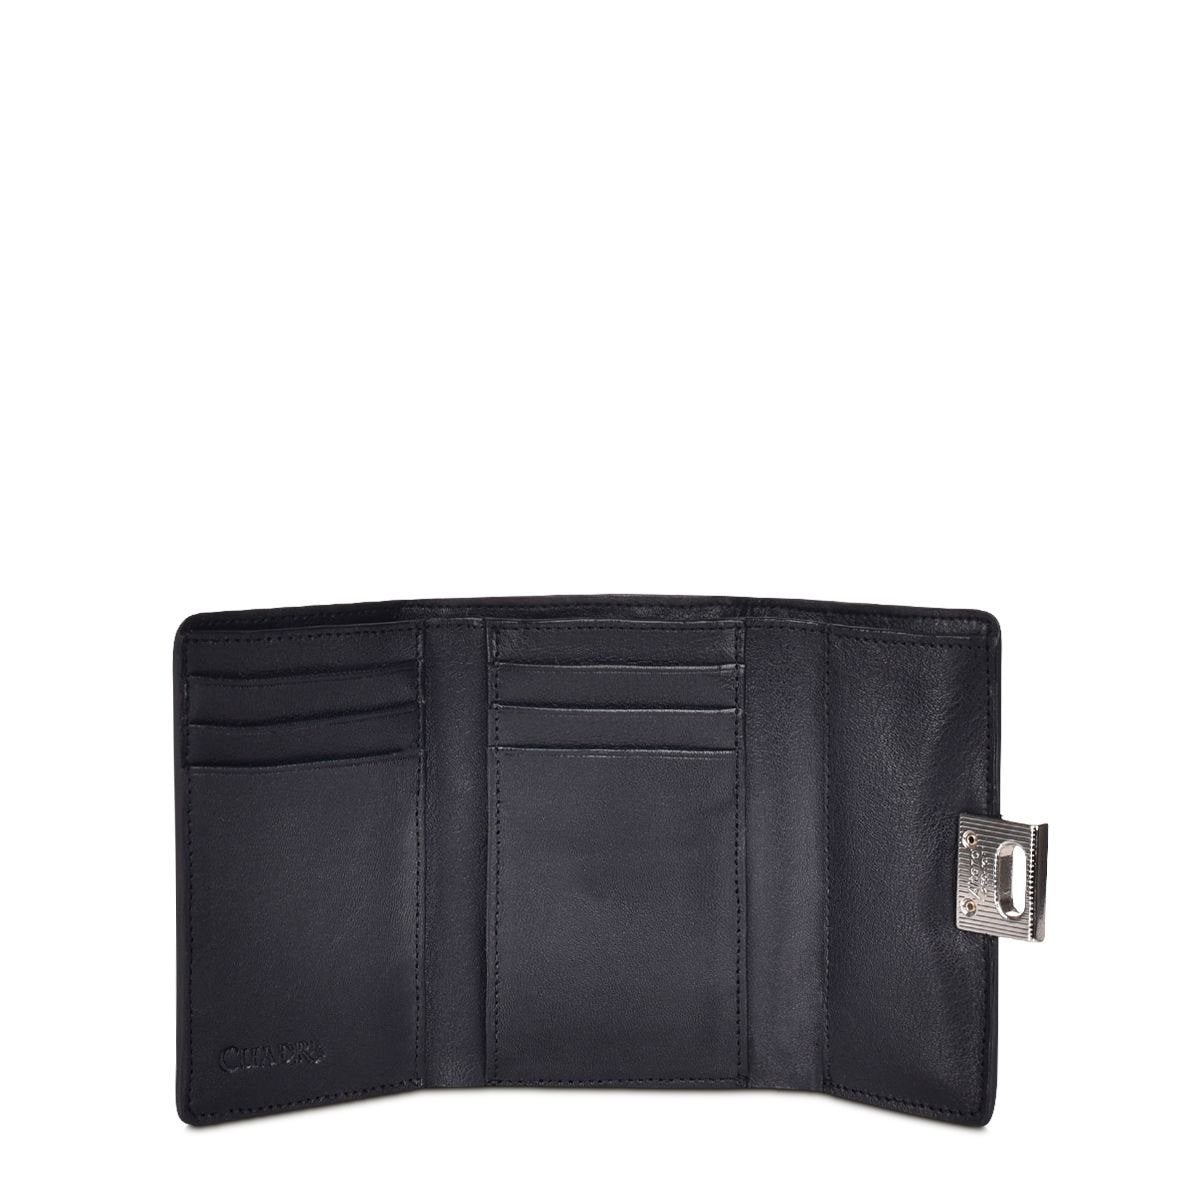 BD197MA - Cuadra black fashion tri-fold stingray leather wallet for women-Kuet.us